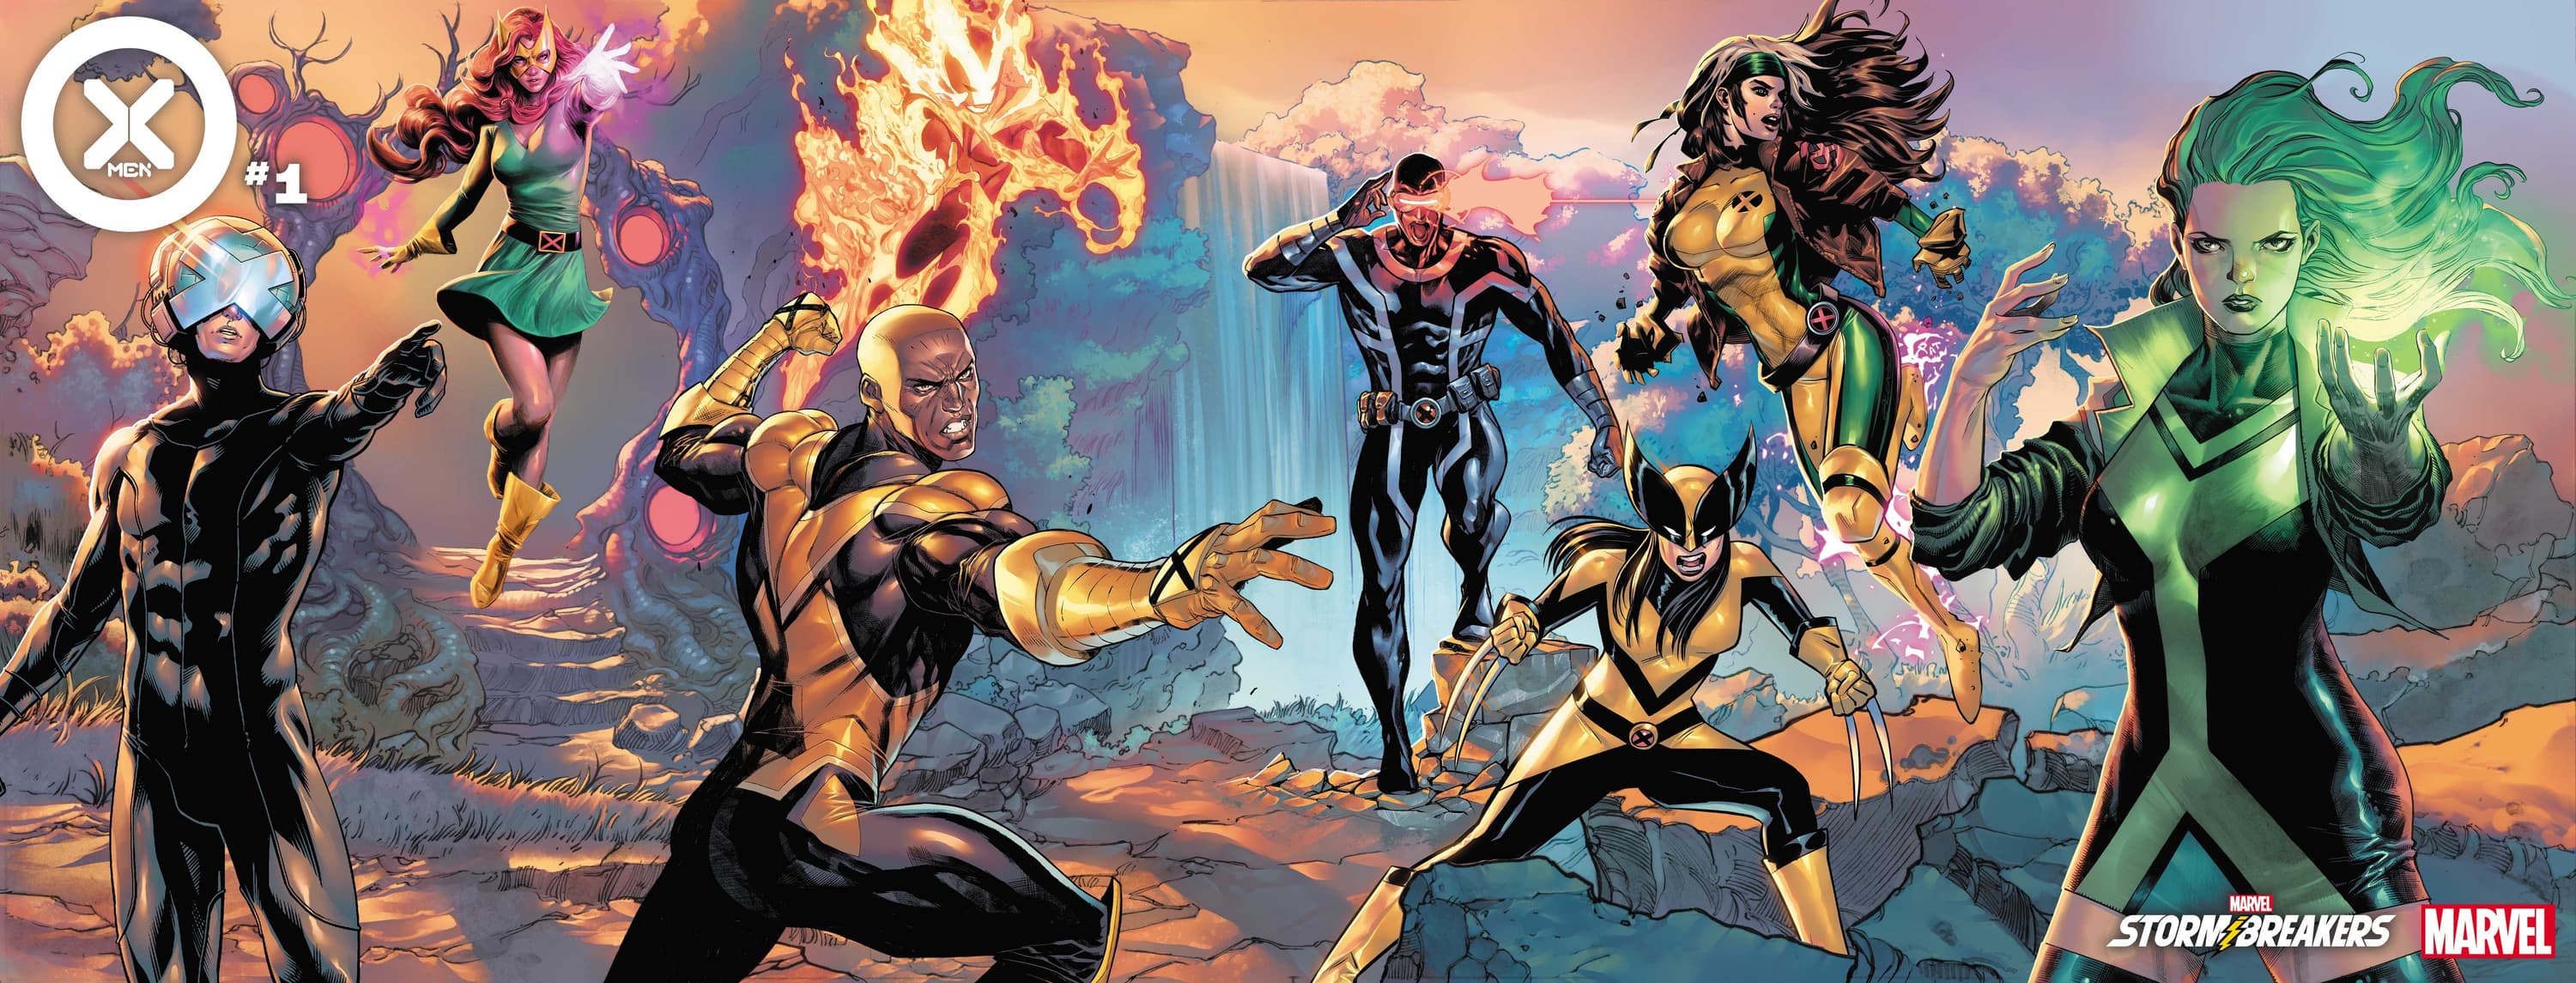 X-Men (2021) #1_Stormbreaker Connected Cover